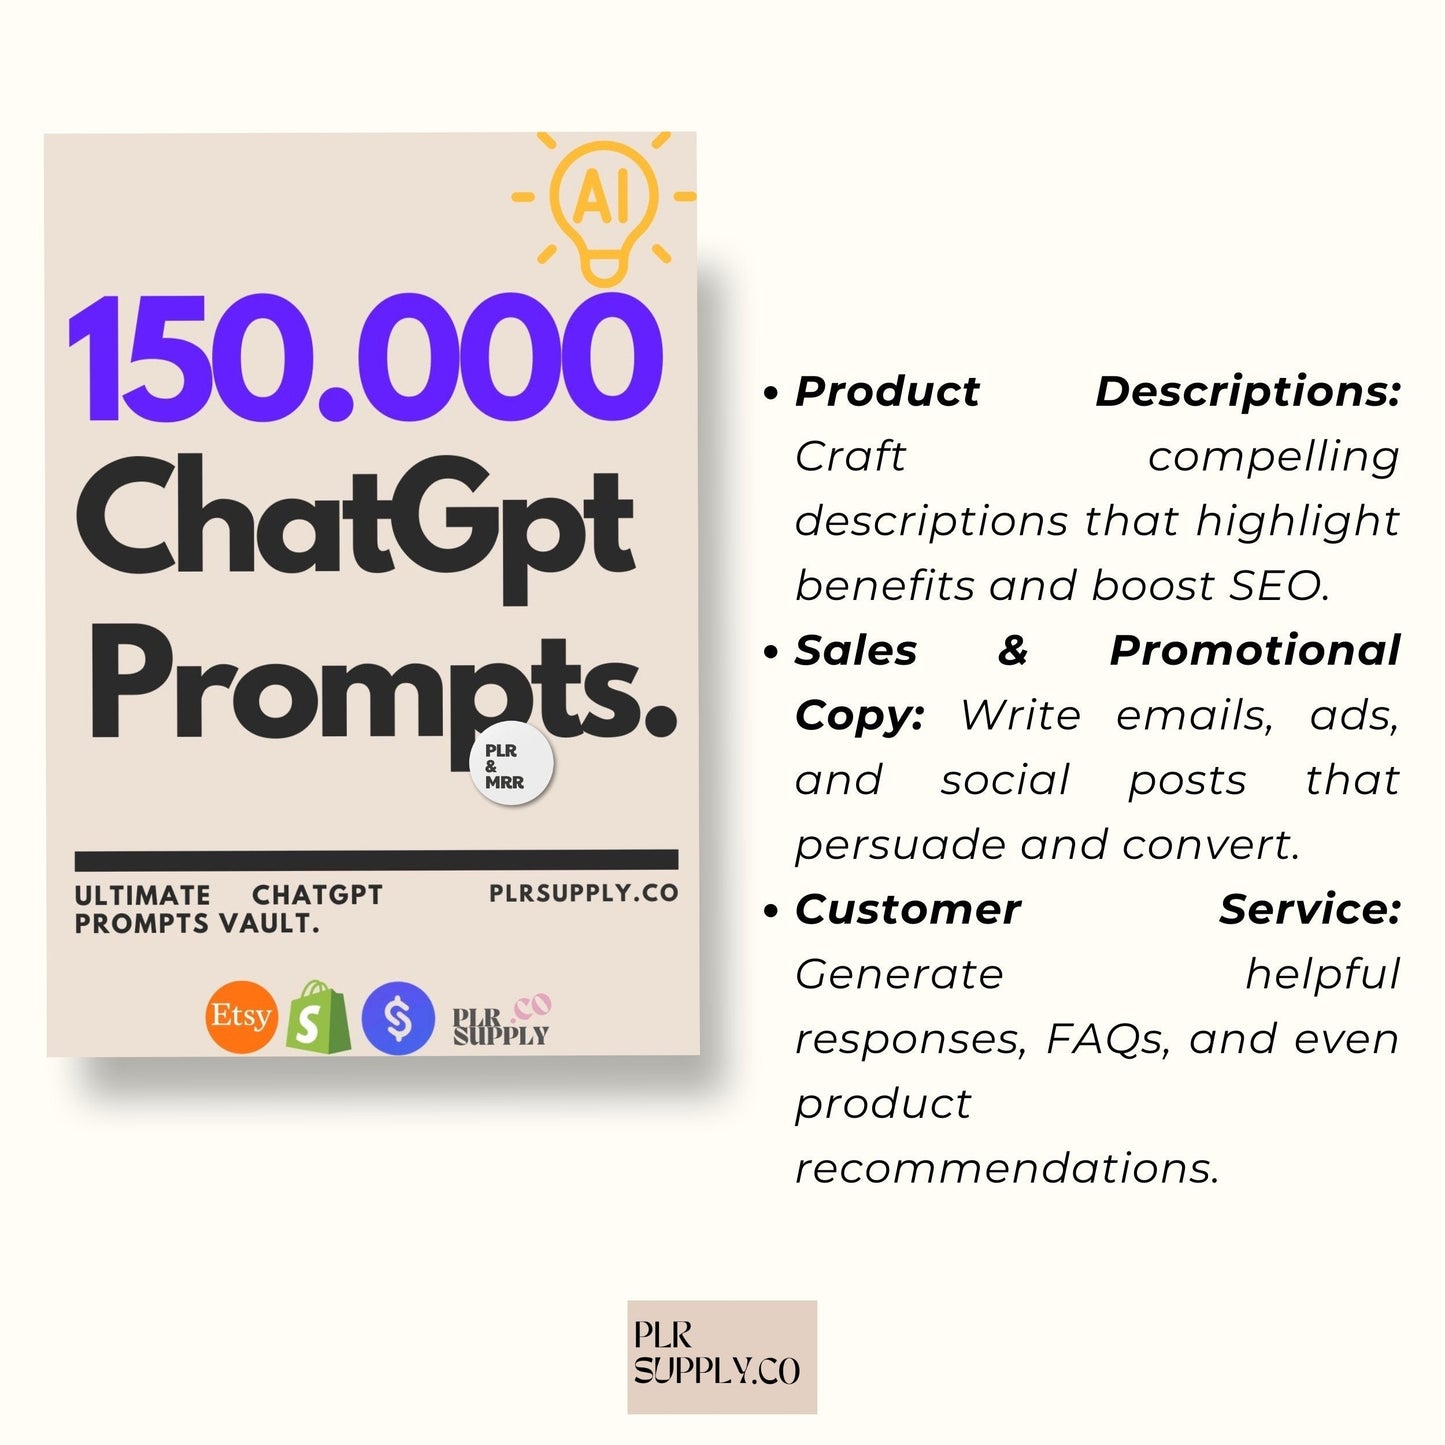 ChatGpt Prompts Mega Bundle Master Resell Rights- DFY Digital Product